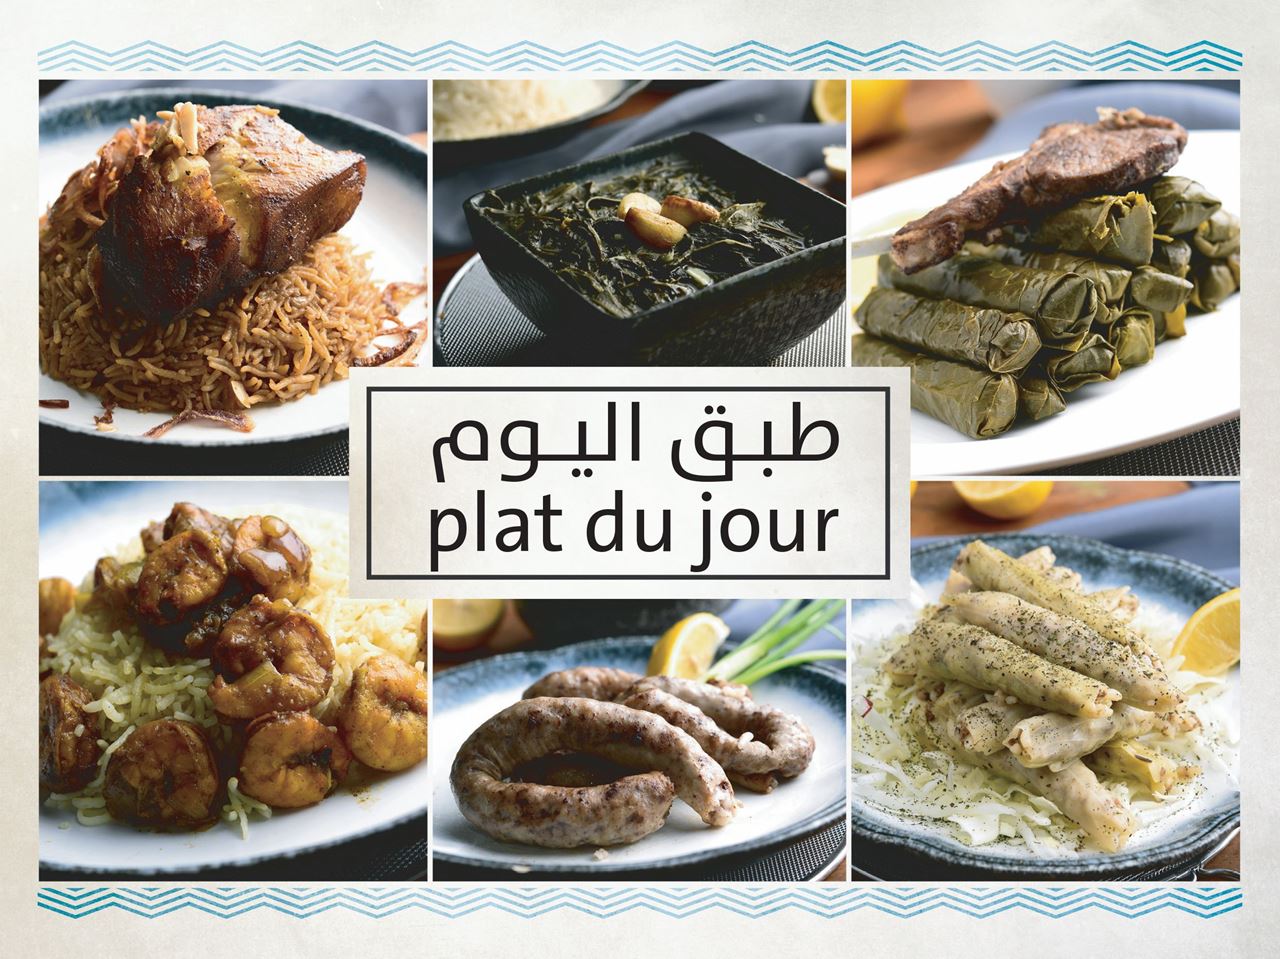 Menu of Hamra Street Restaurant and Cafe in Kuwait